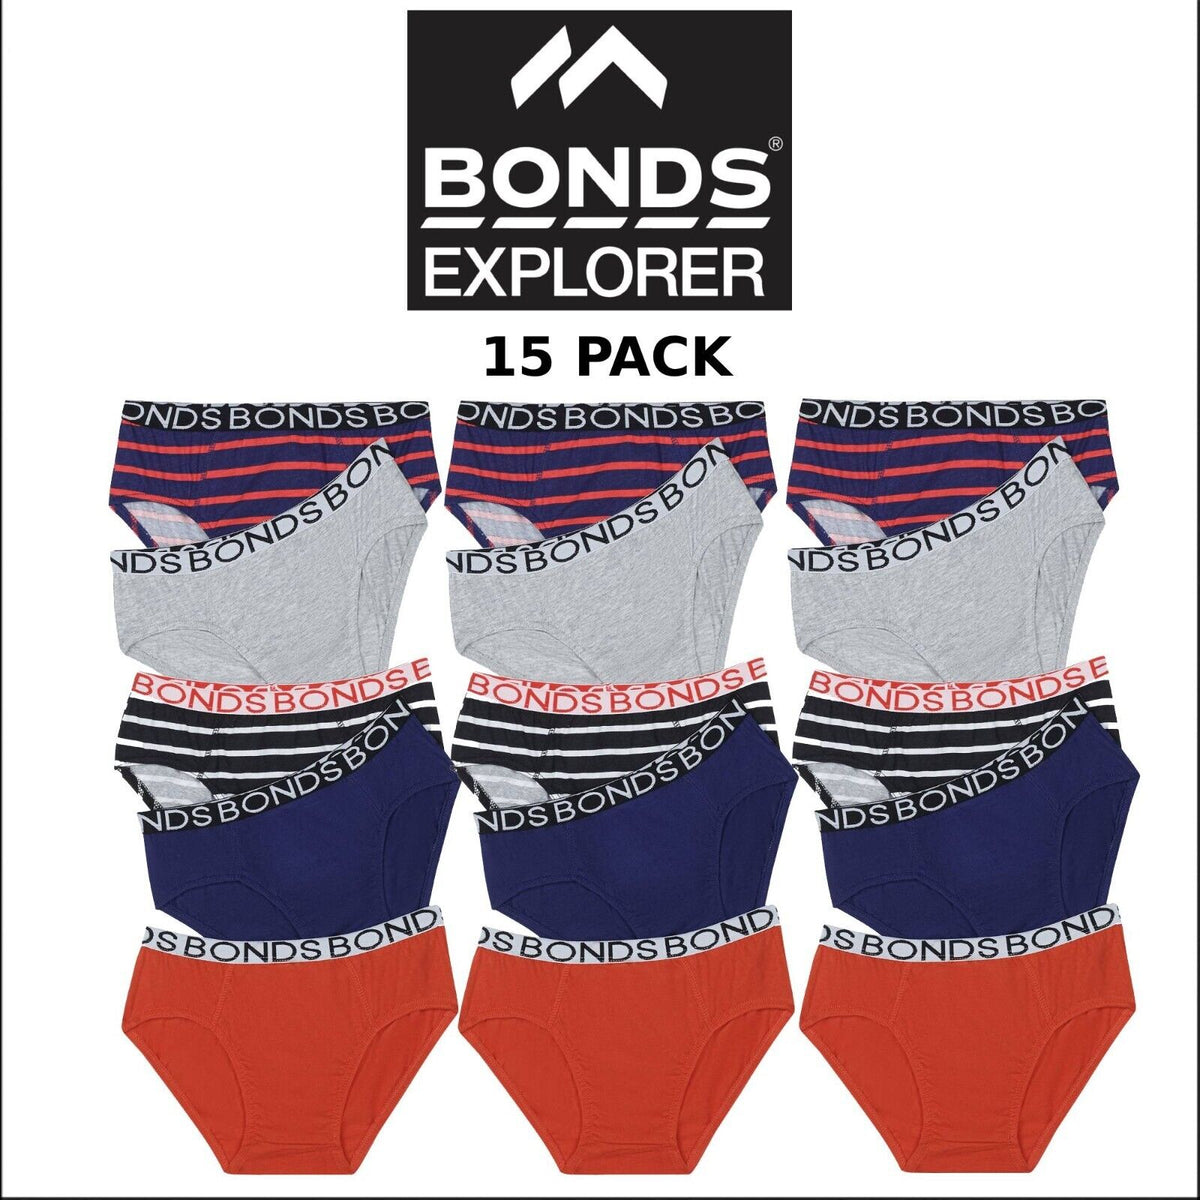 Bonds Boys Brief Soft Stretchable Comfortable Contoured Fit 15 Pack UWNU5A X79